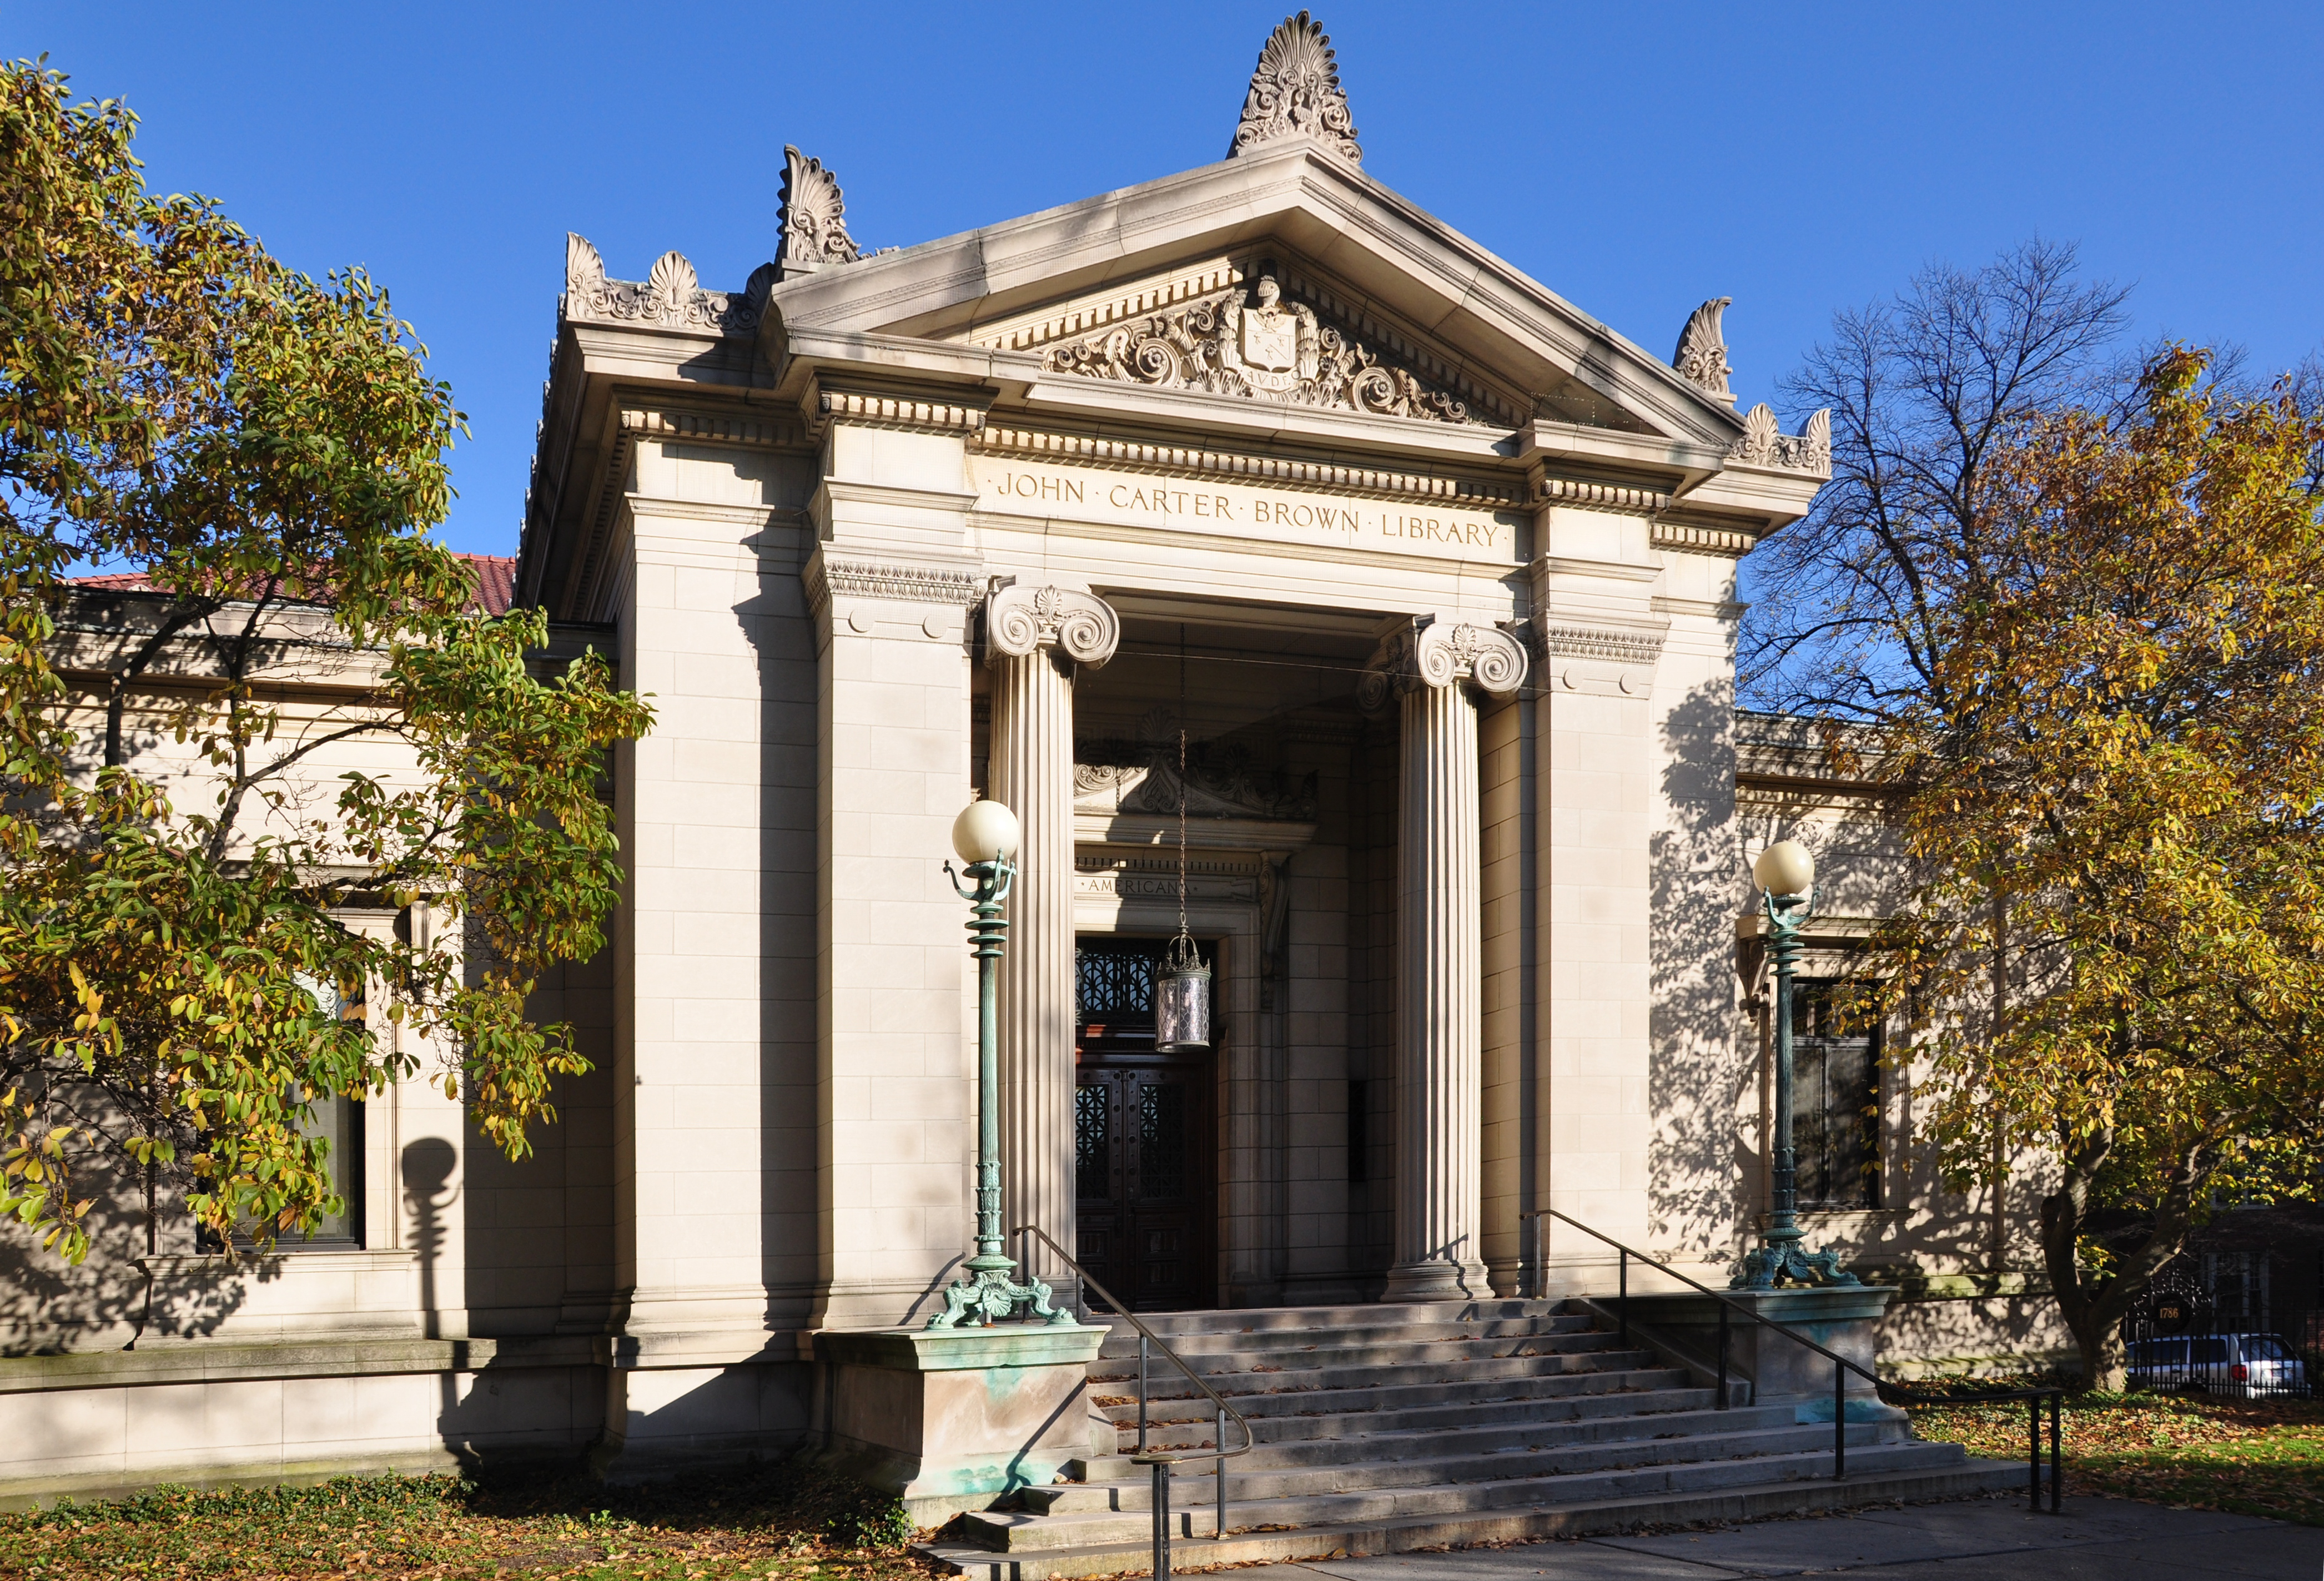 Facade of the John Carter Brown Library in Providence, Rhode Island